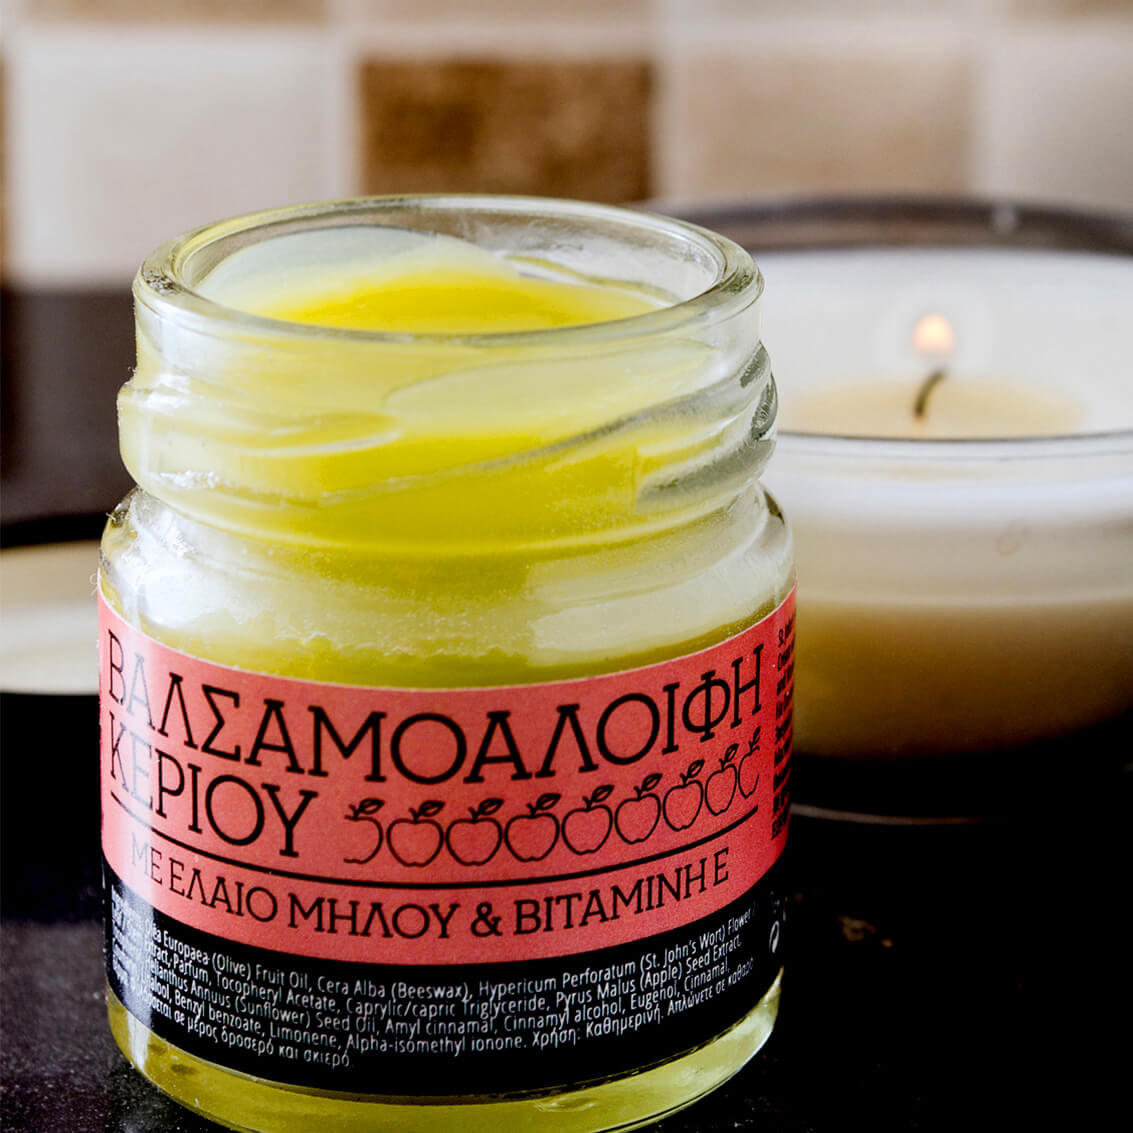 St. John’s wort oil wax cream apple oil vitamin E natural cosmetics 100 made in Greece parabens sls